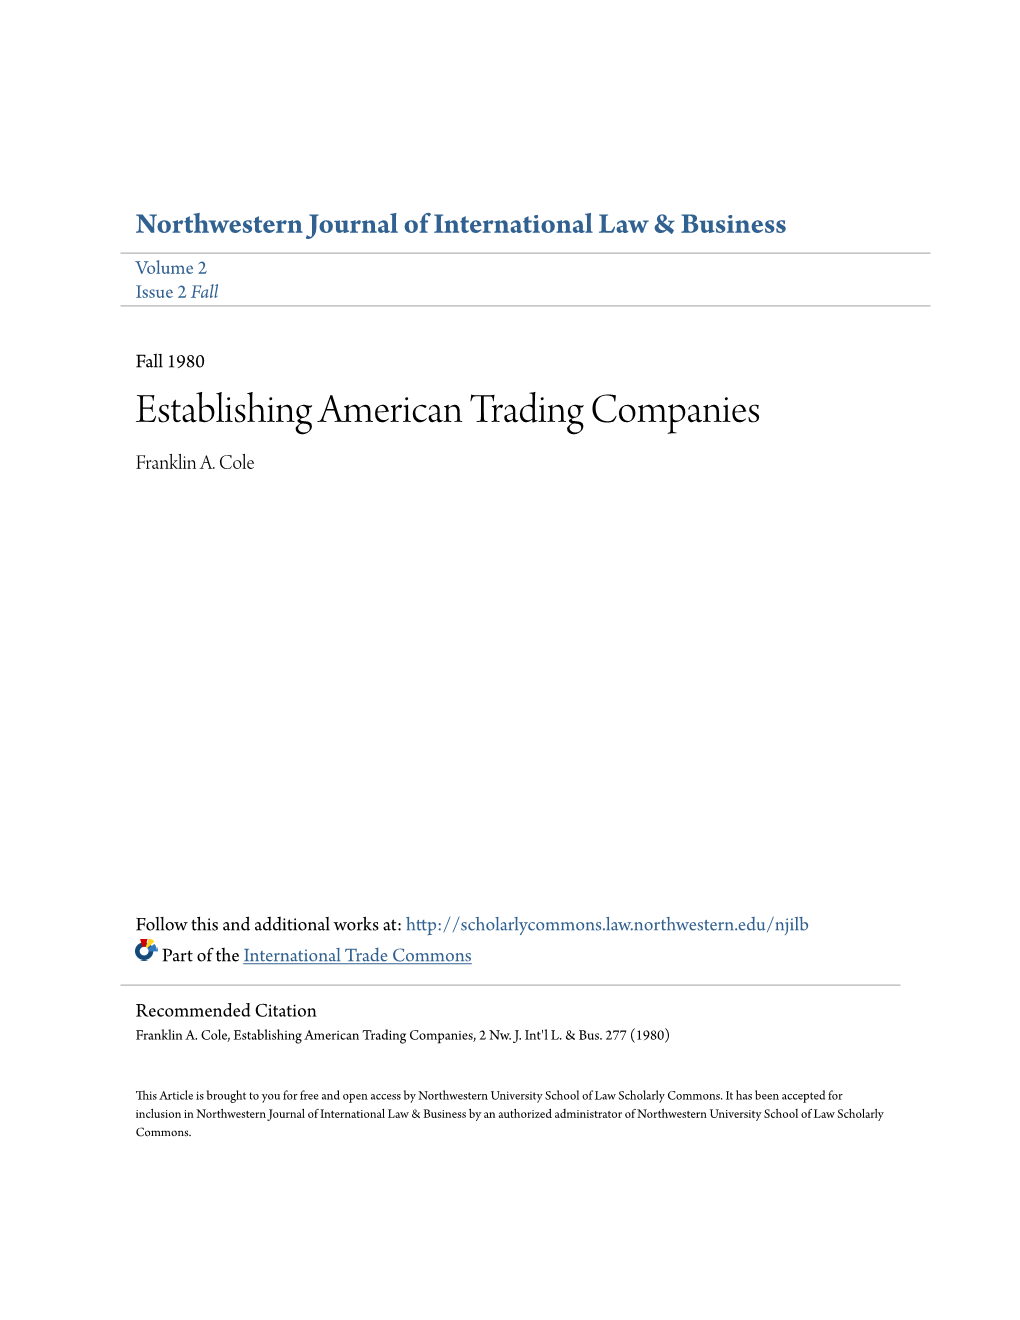 Establishing American Trading Companies Franklin A